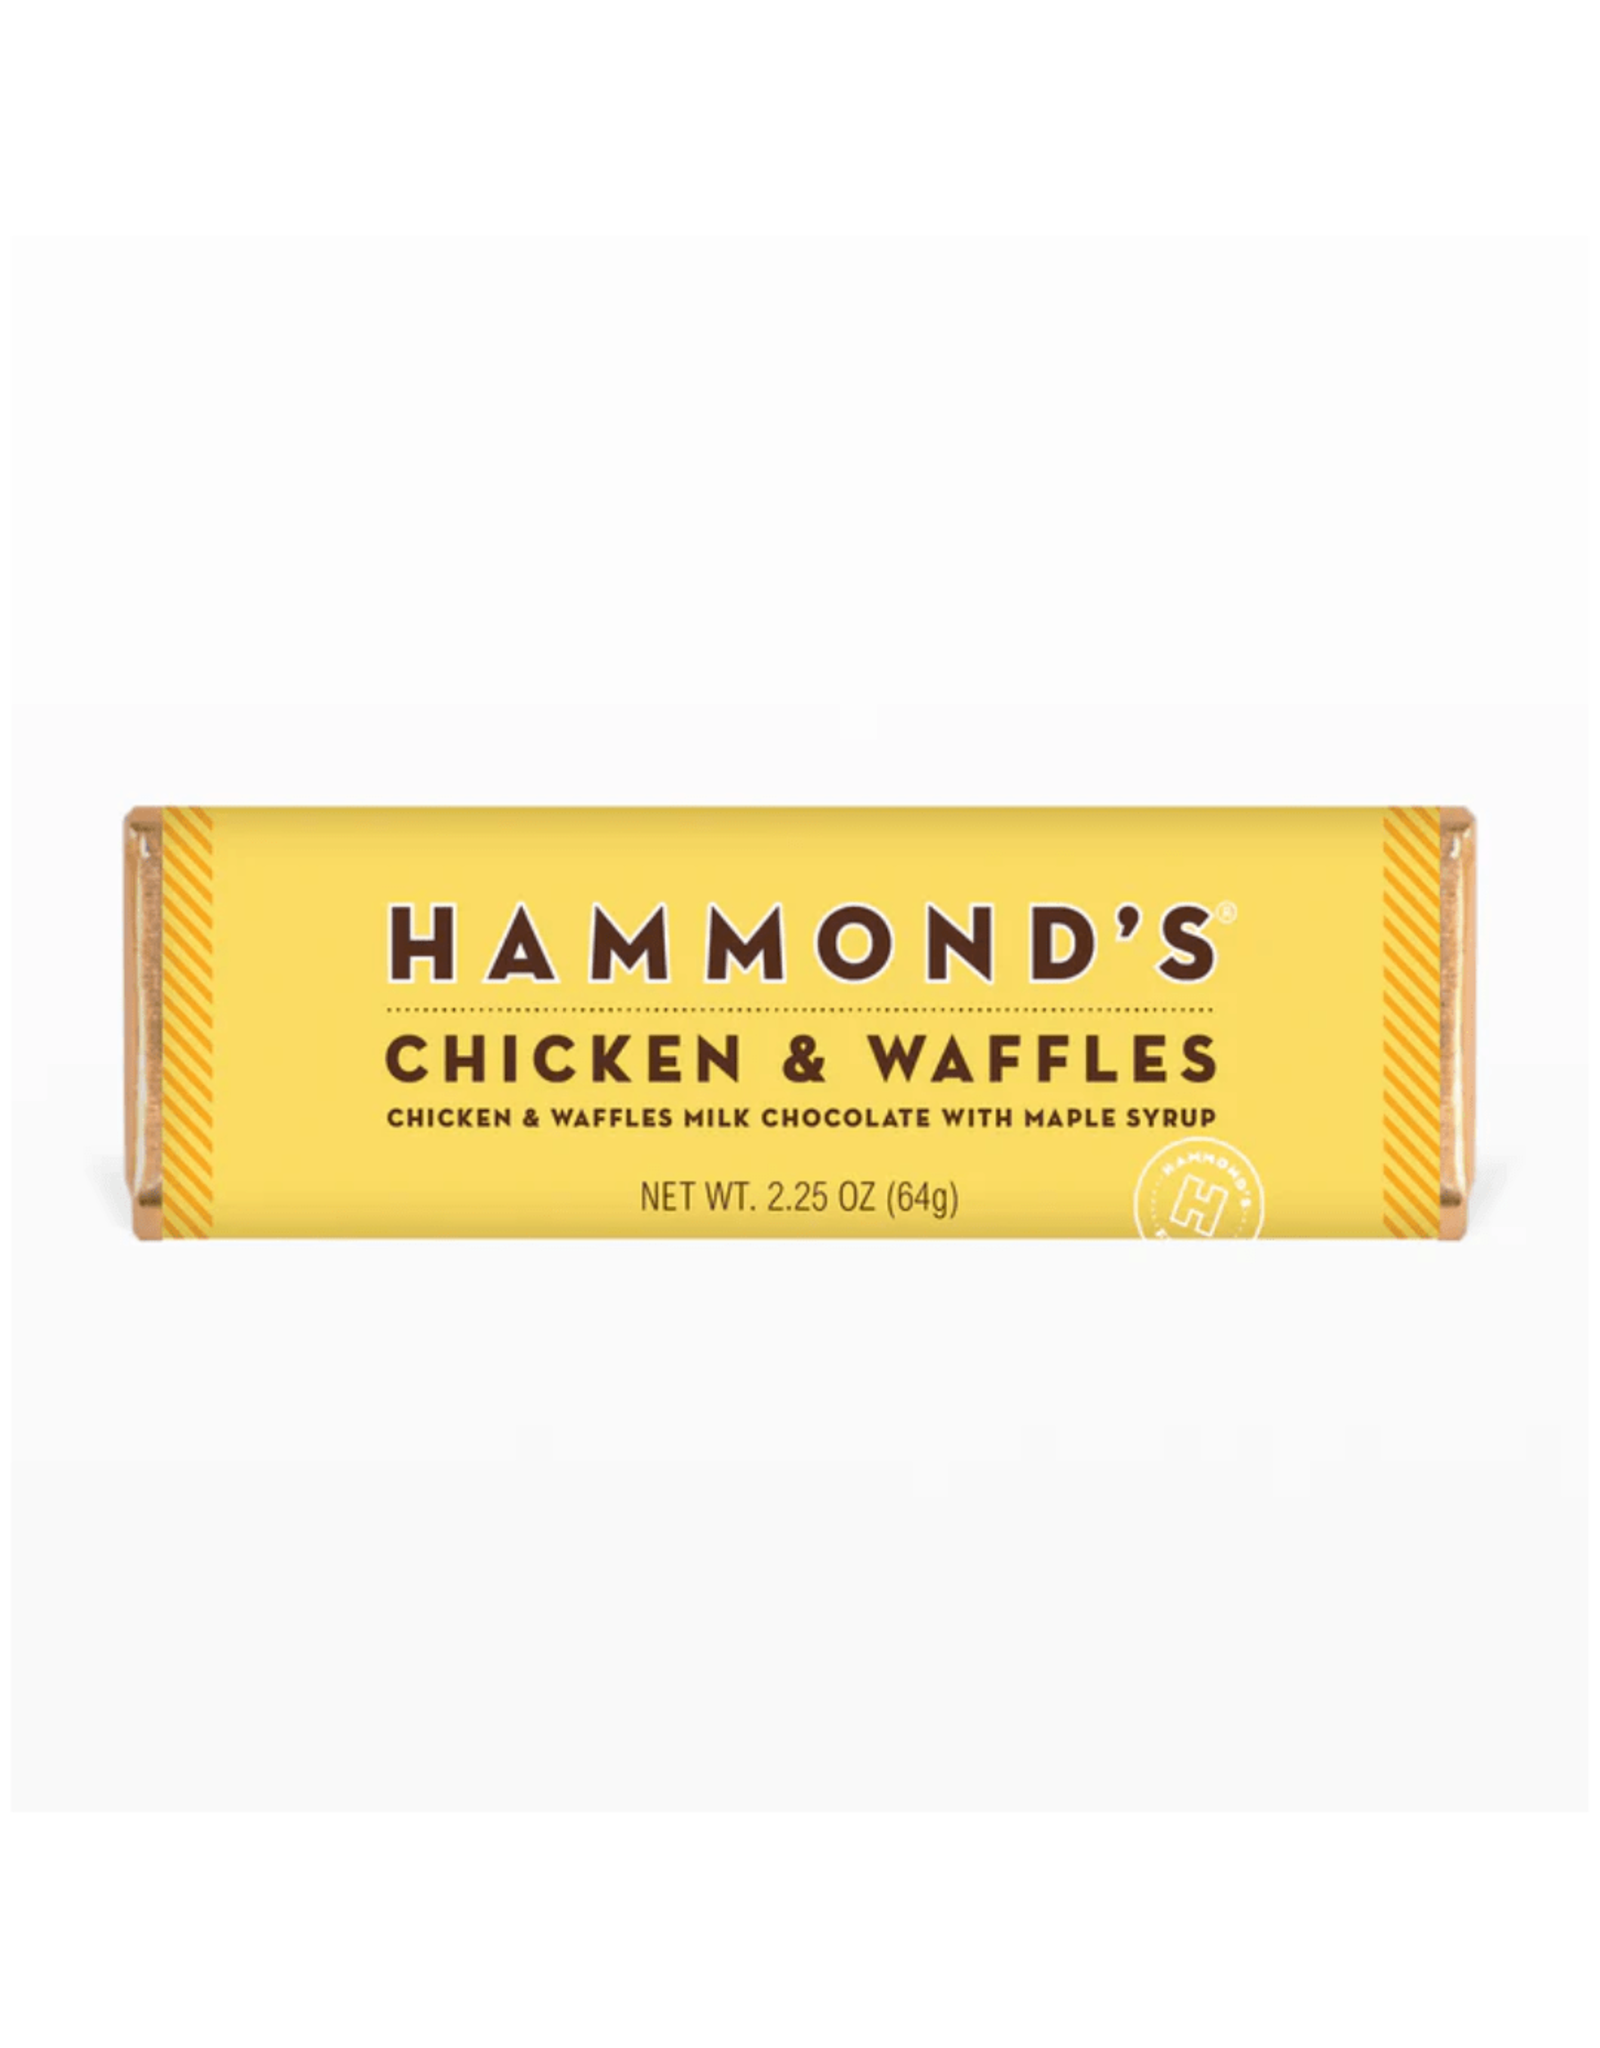 Hammond's Chicken & Waffles Chocolate Bar